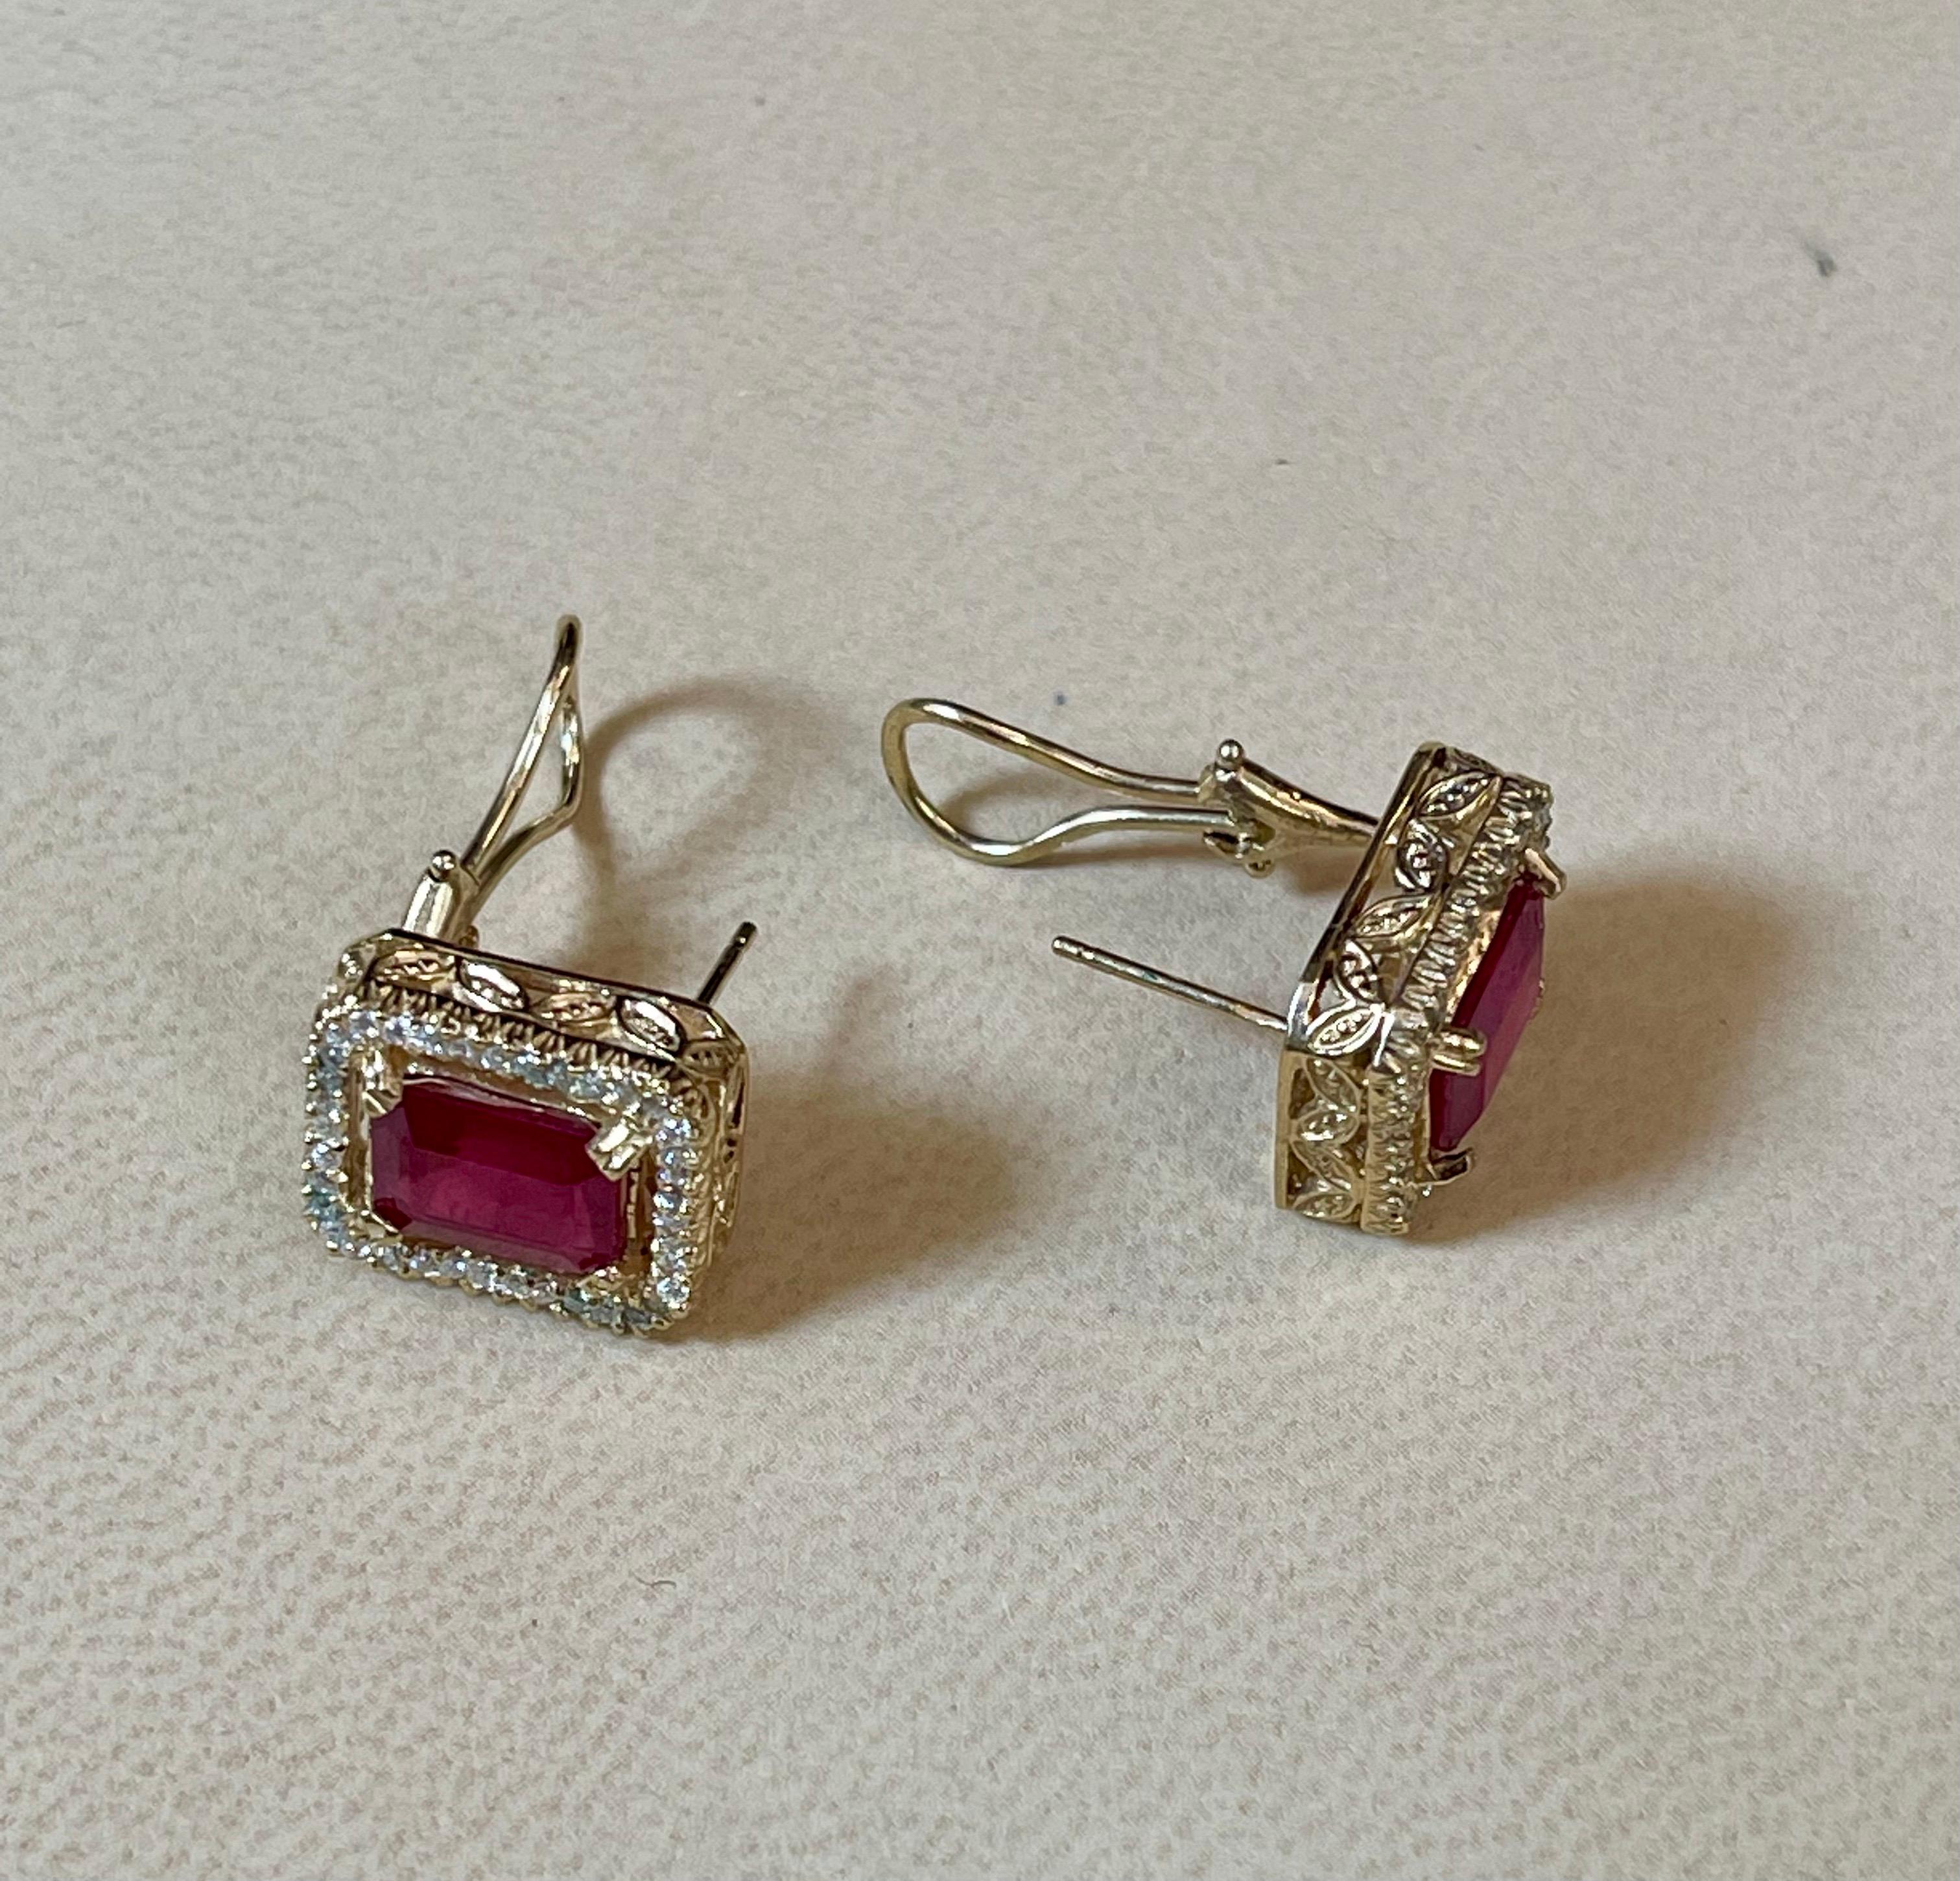 6 Carat Emerald Cut Treated Ruby & .7 Ct Diamond Stud Earrings 14 Kt Yellow Gold 3